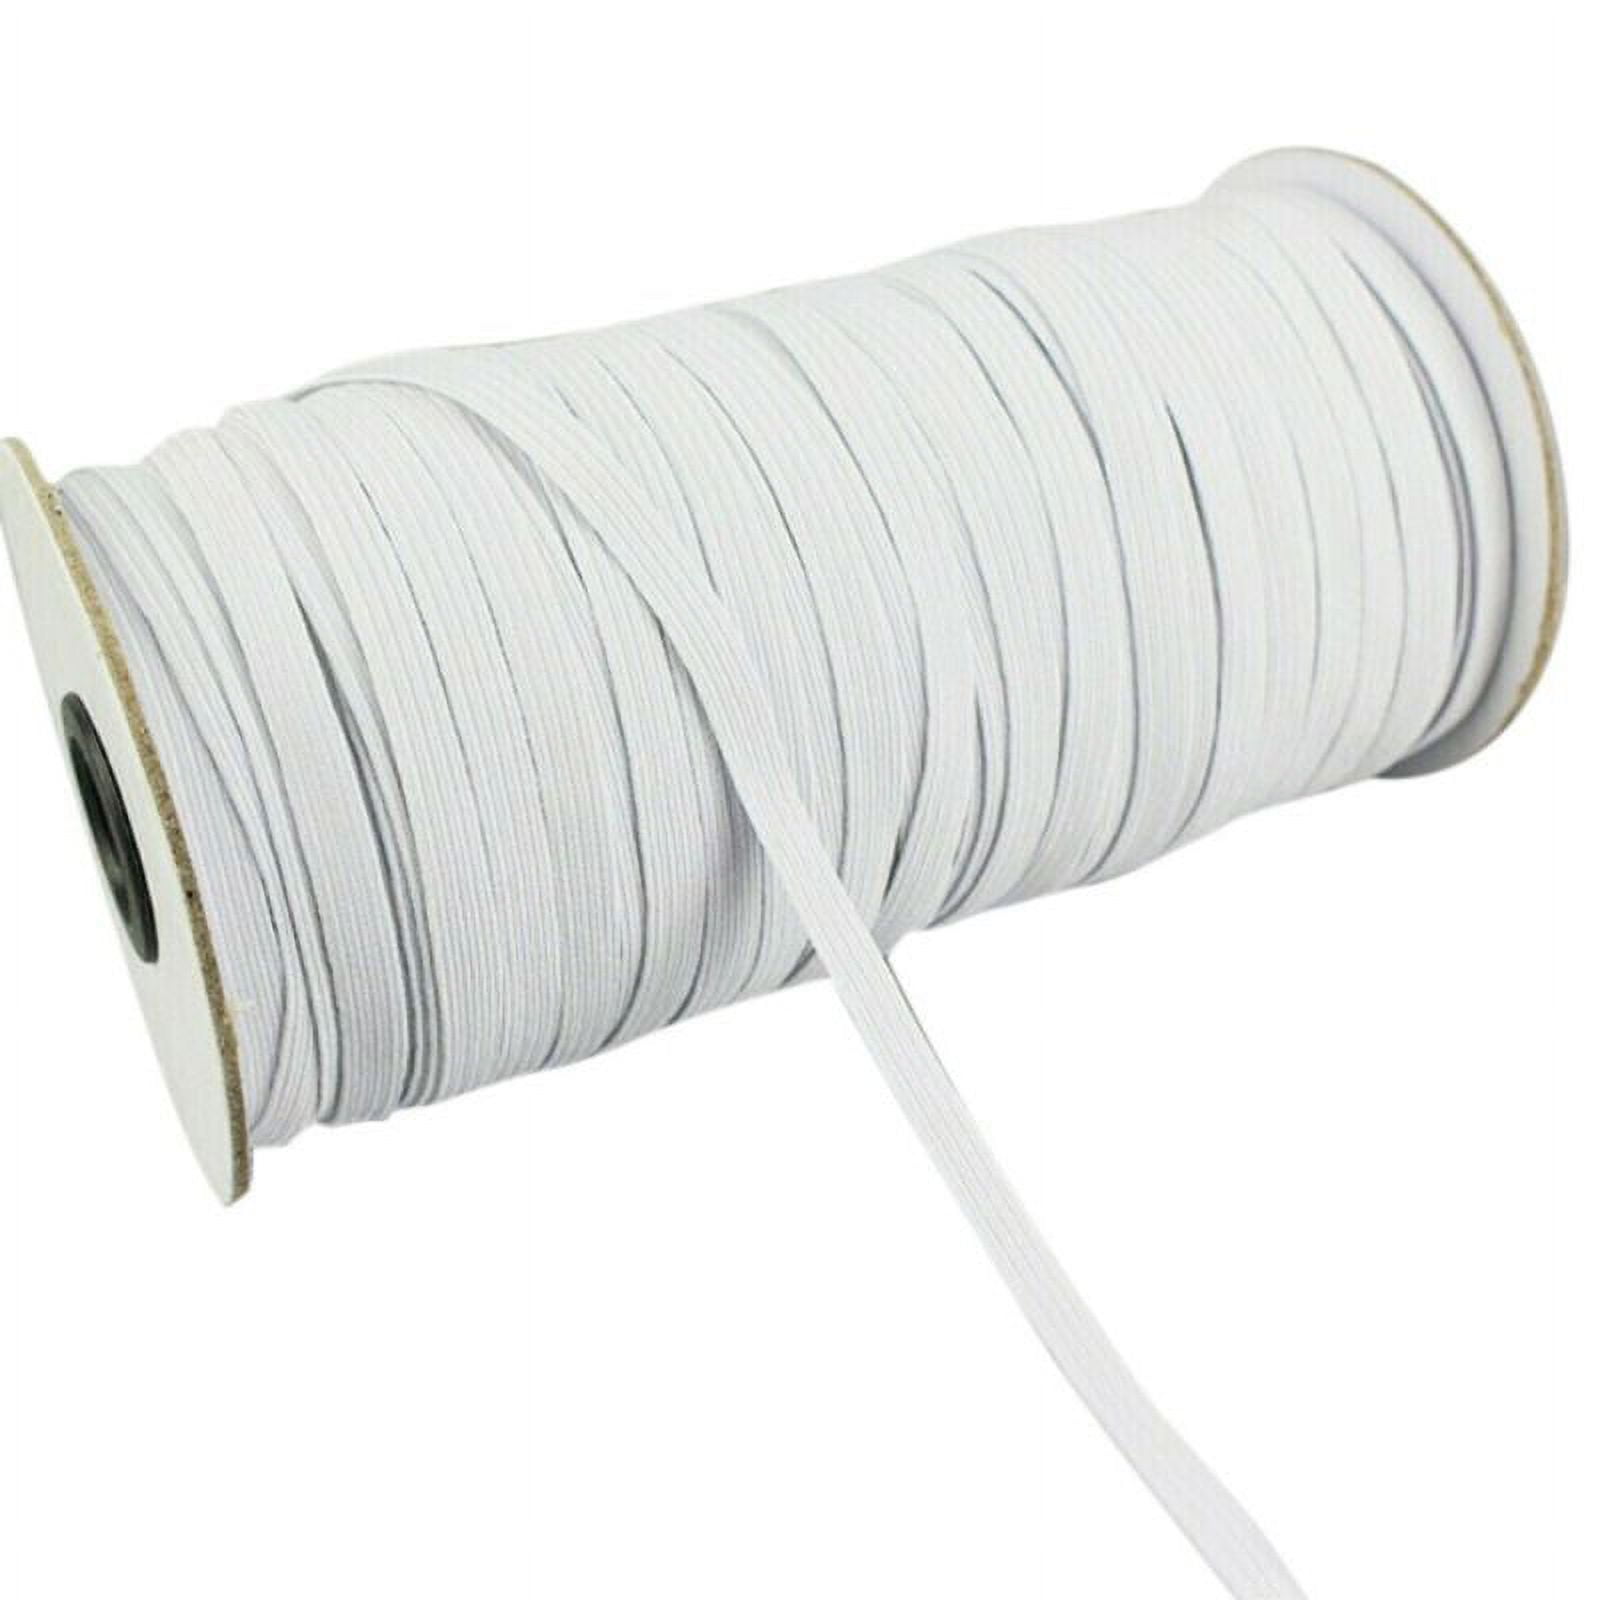 3mm 6/9 mmFlat Elastic Band white Elastic ribbon yards 1/8 White Braided  Elasticfor Sewing Clothing Face Mask and Crafts Ribbed Sew Elastic - 1 Roll